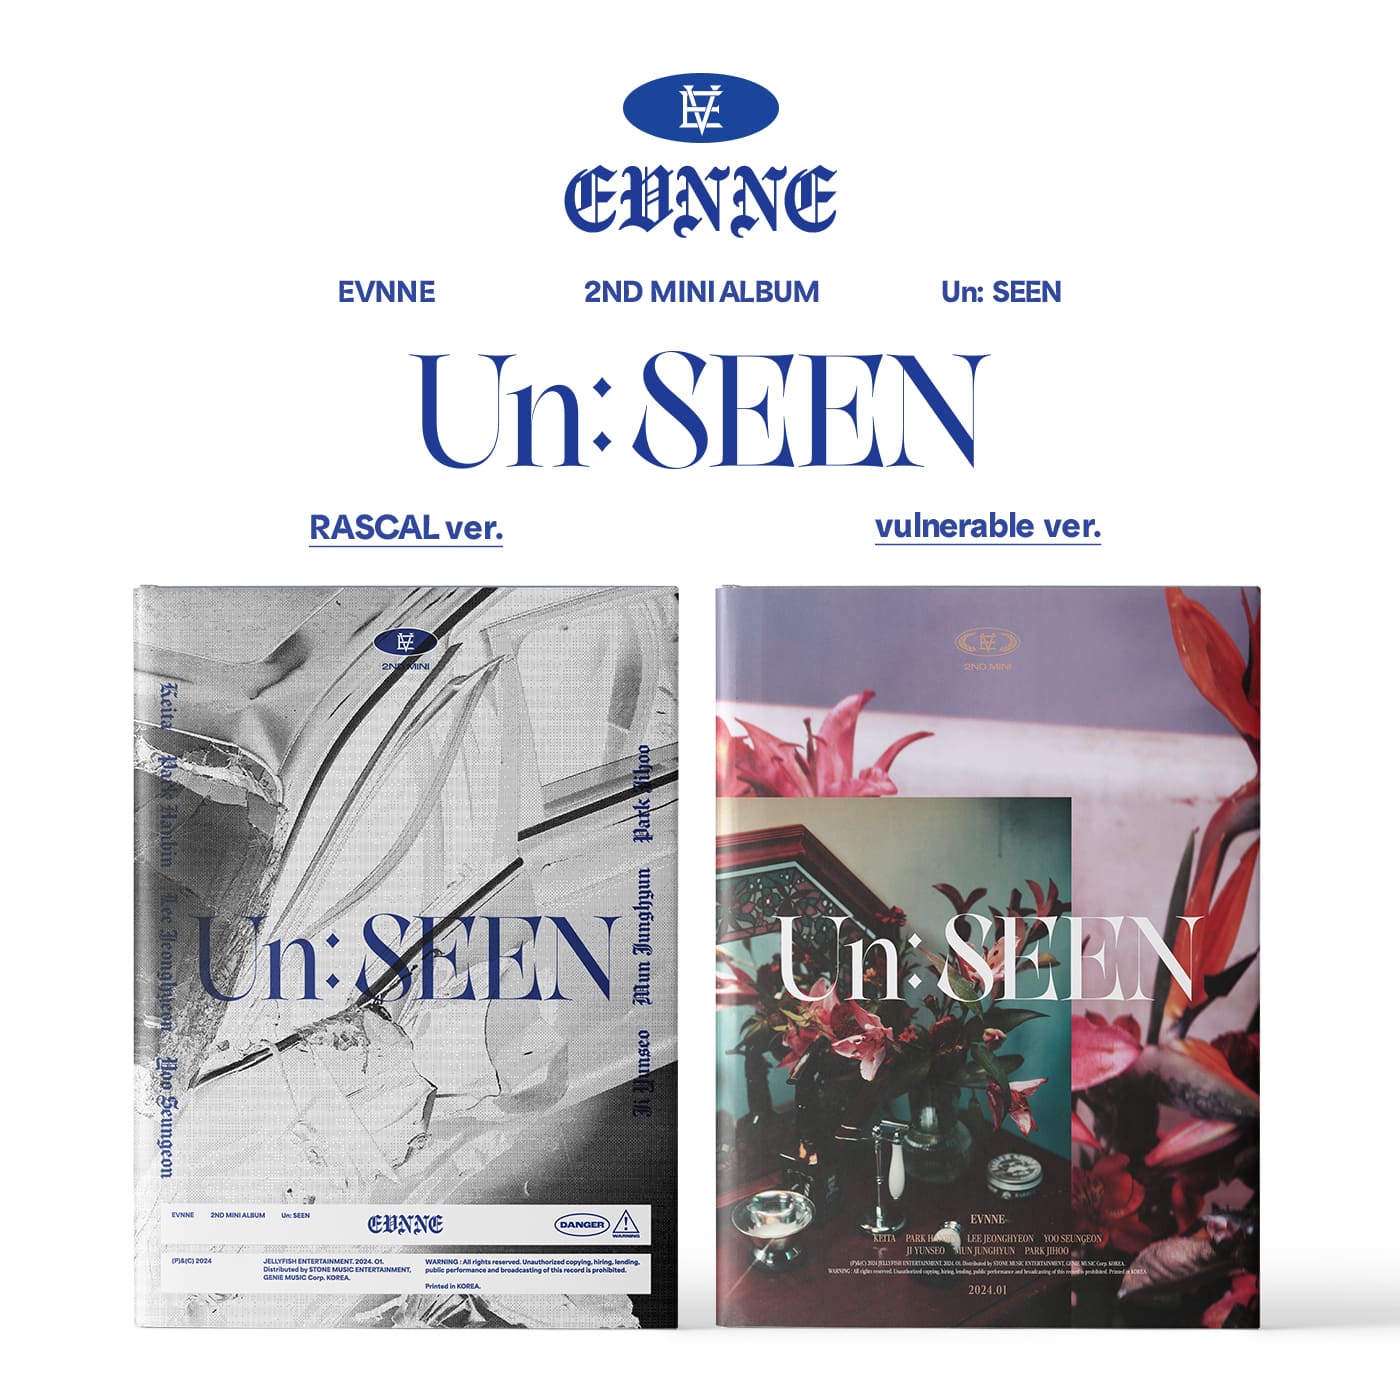 EVNNE 2nd Mini Album Un: SEEN